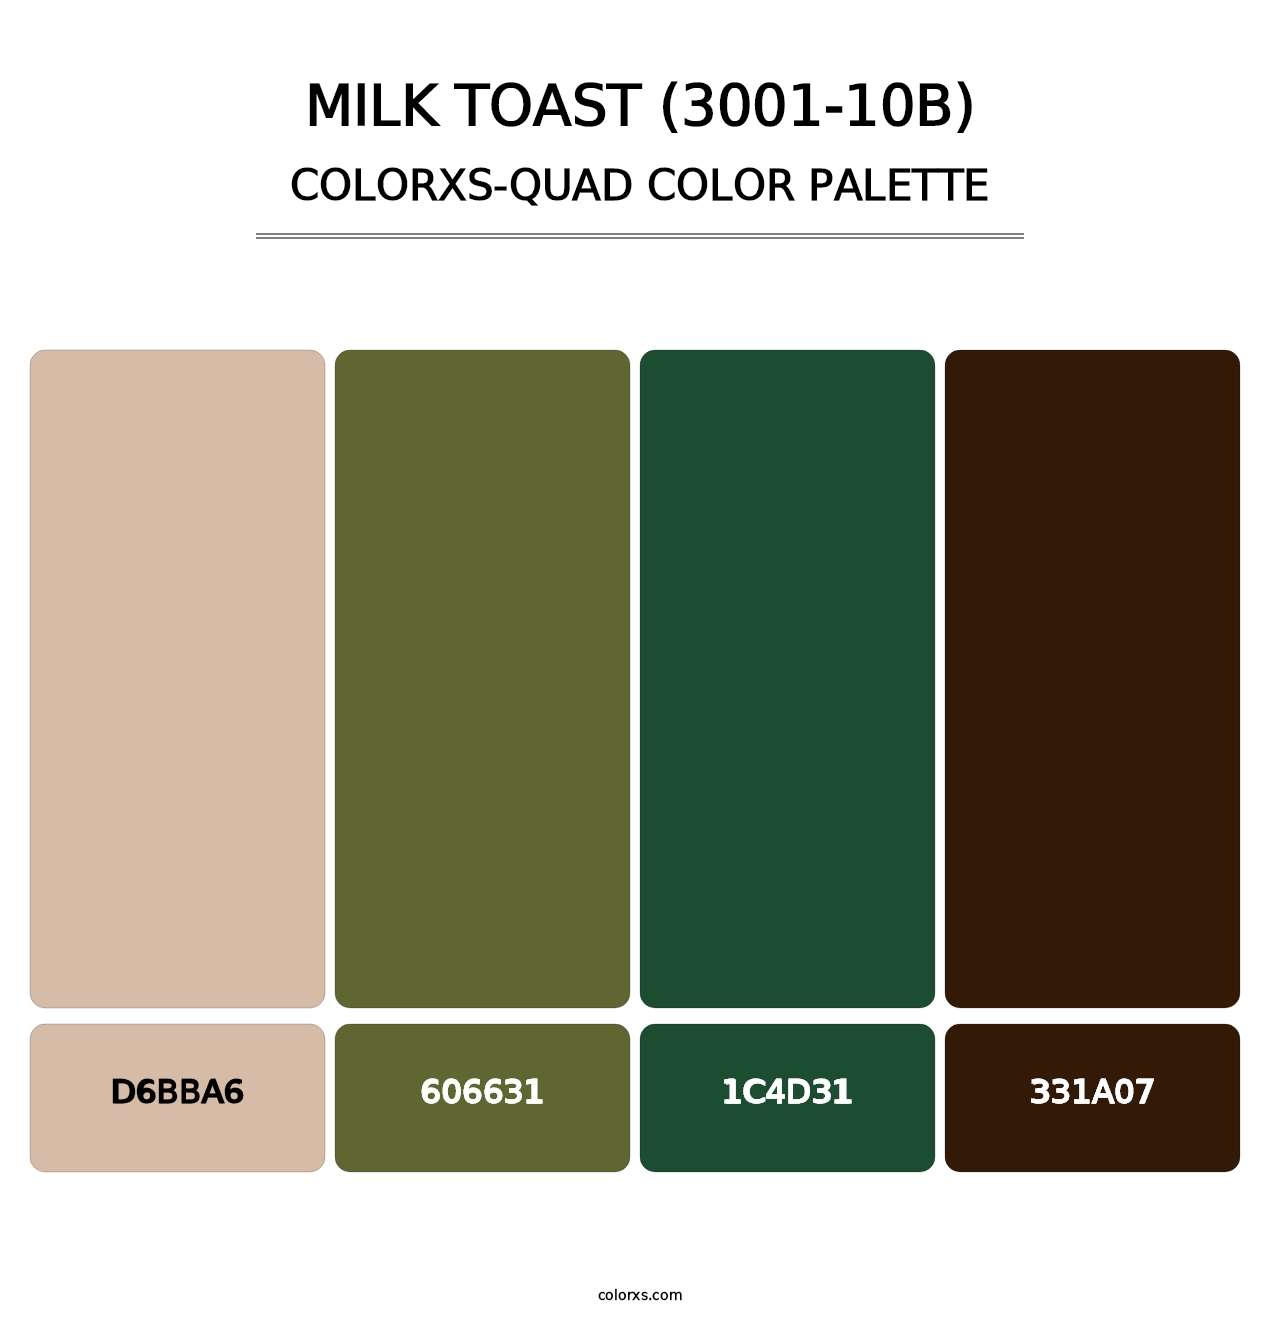 Milk Toast (3001-10B) - Colorxs Quad Palette